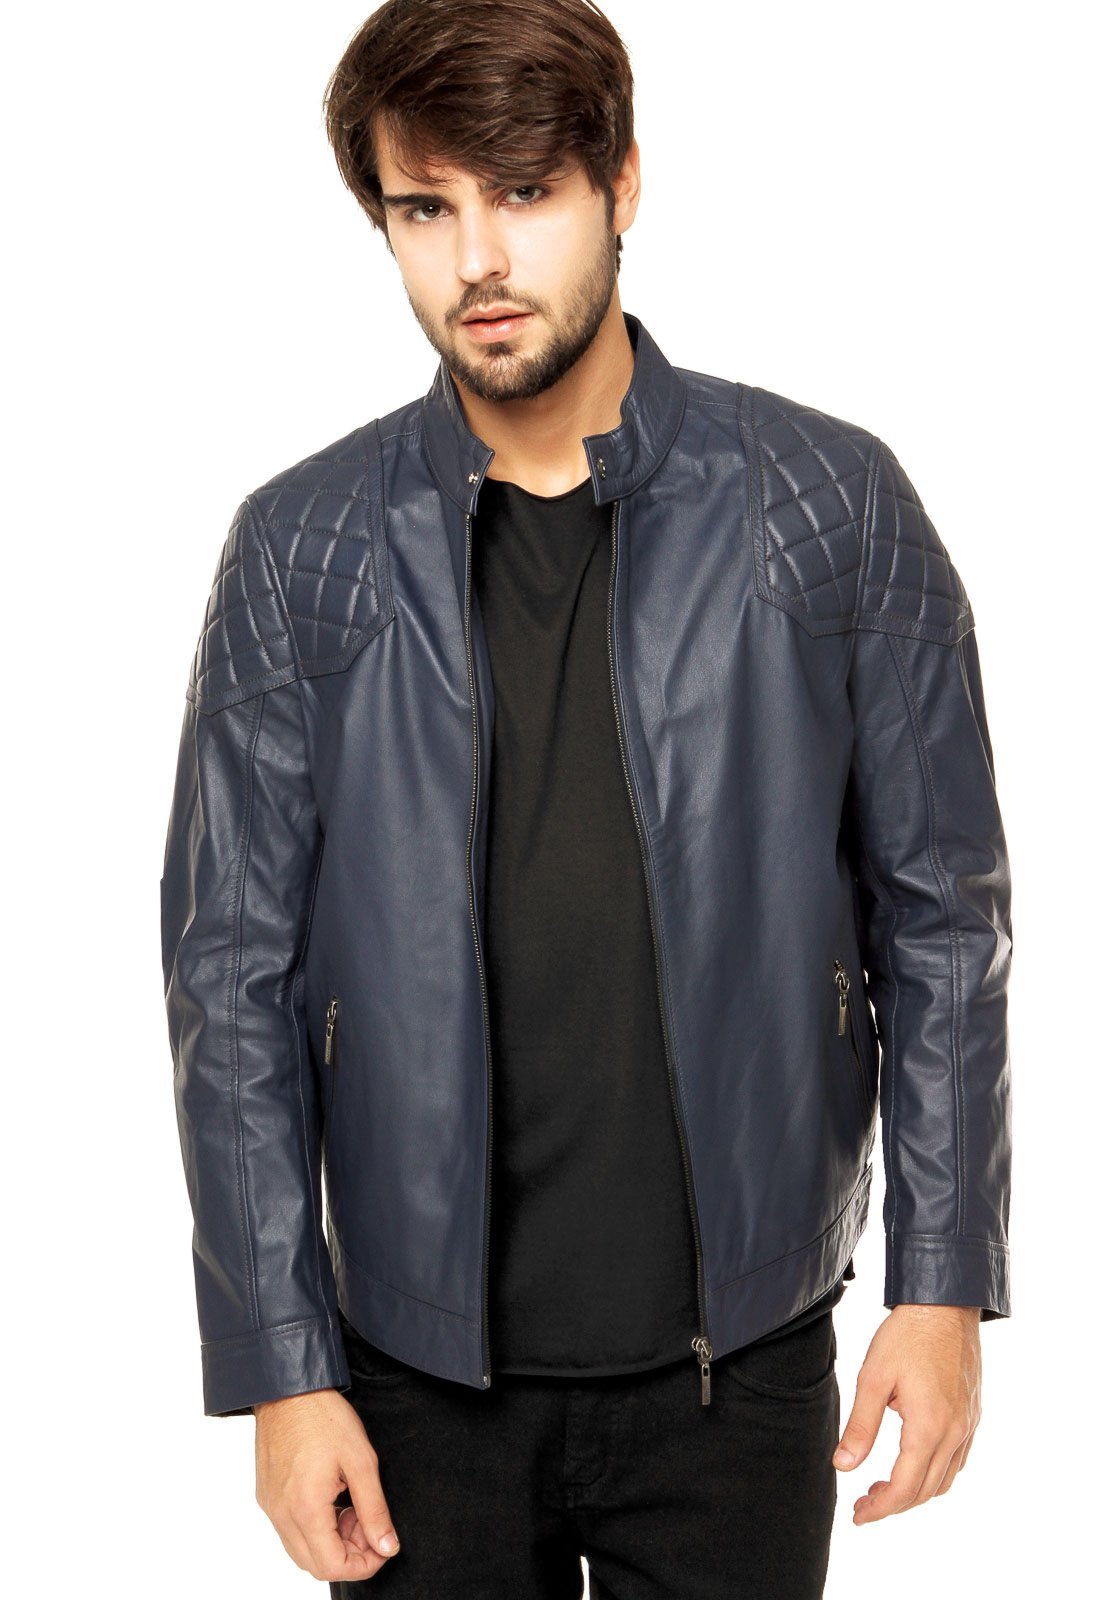 jaqueta de couro cinza masculina